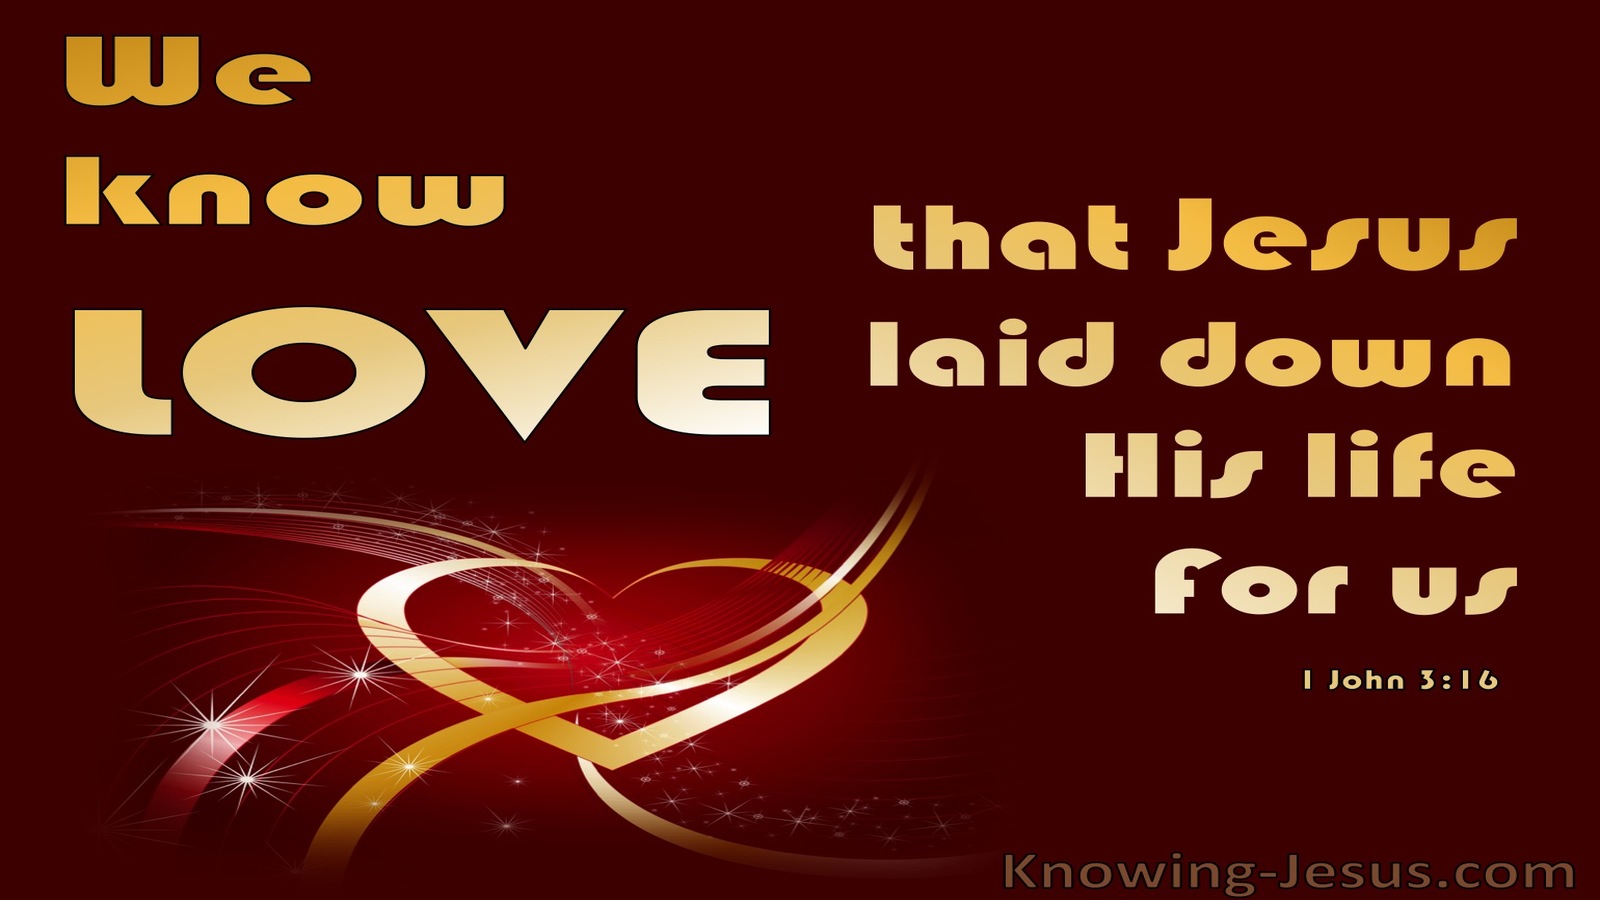 1 John 3:16 Love Jesus Laid Down His Life (red)